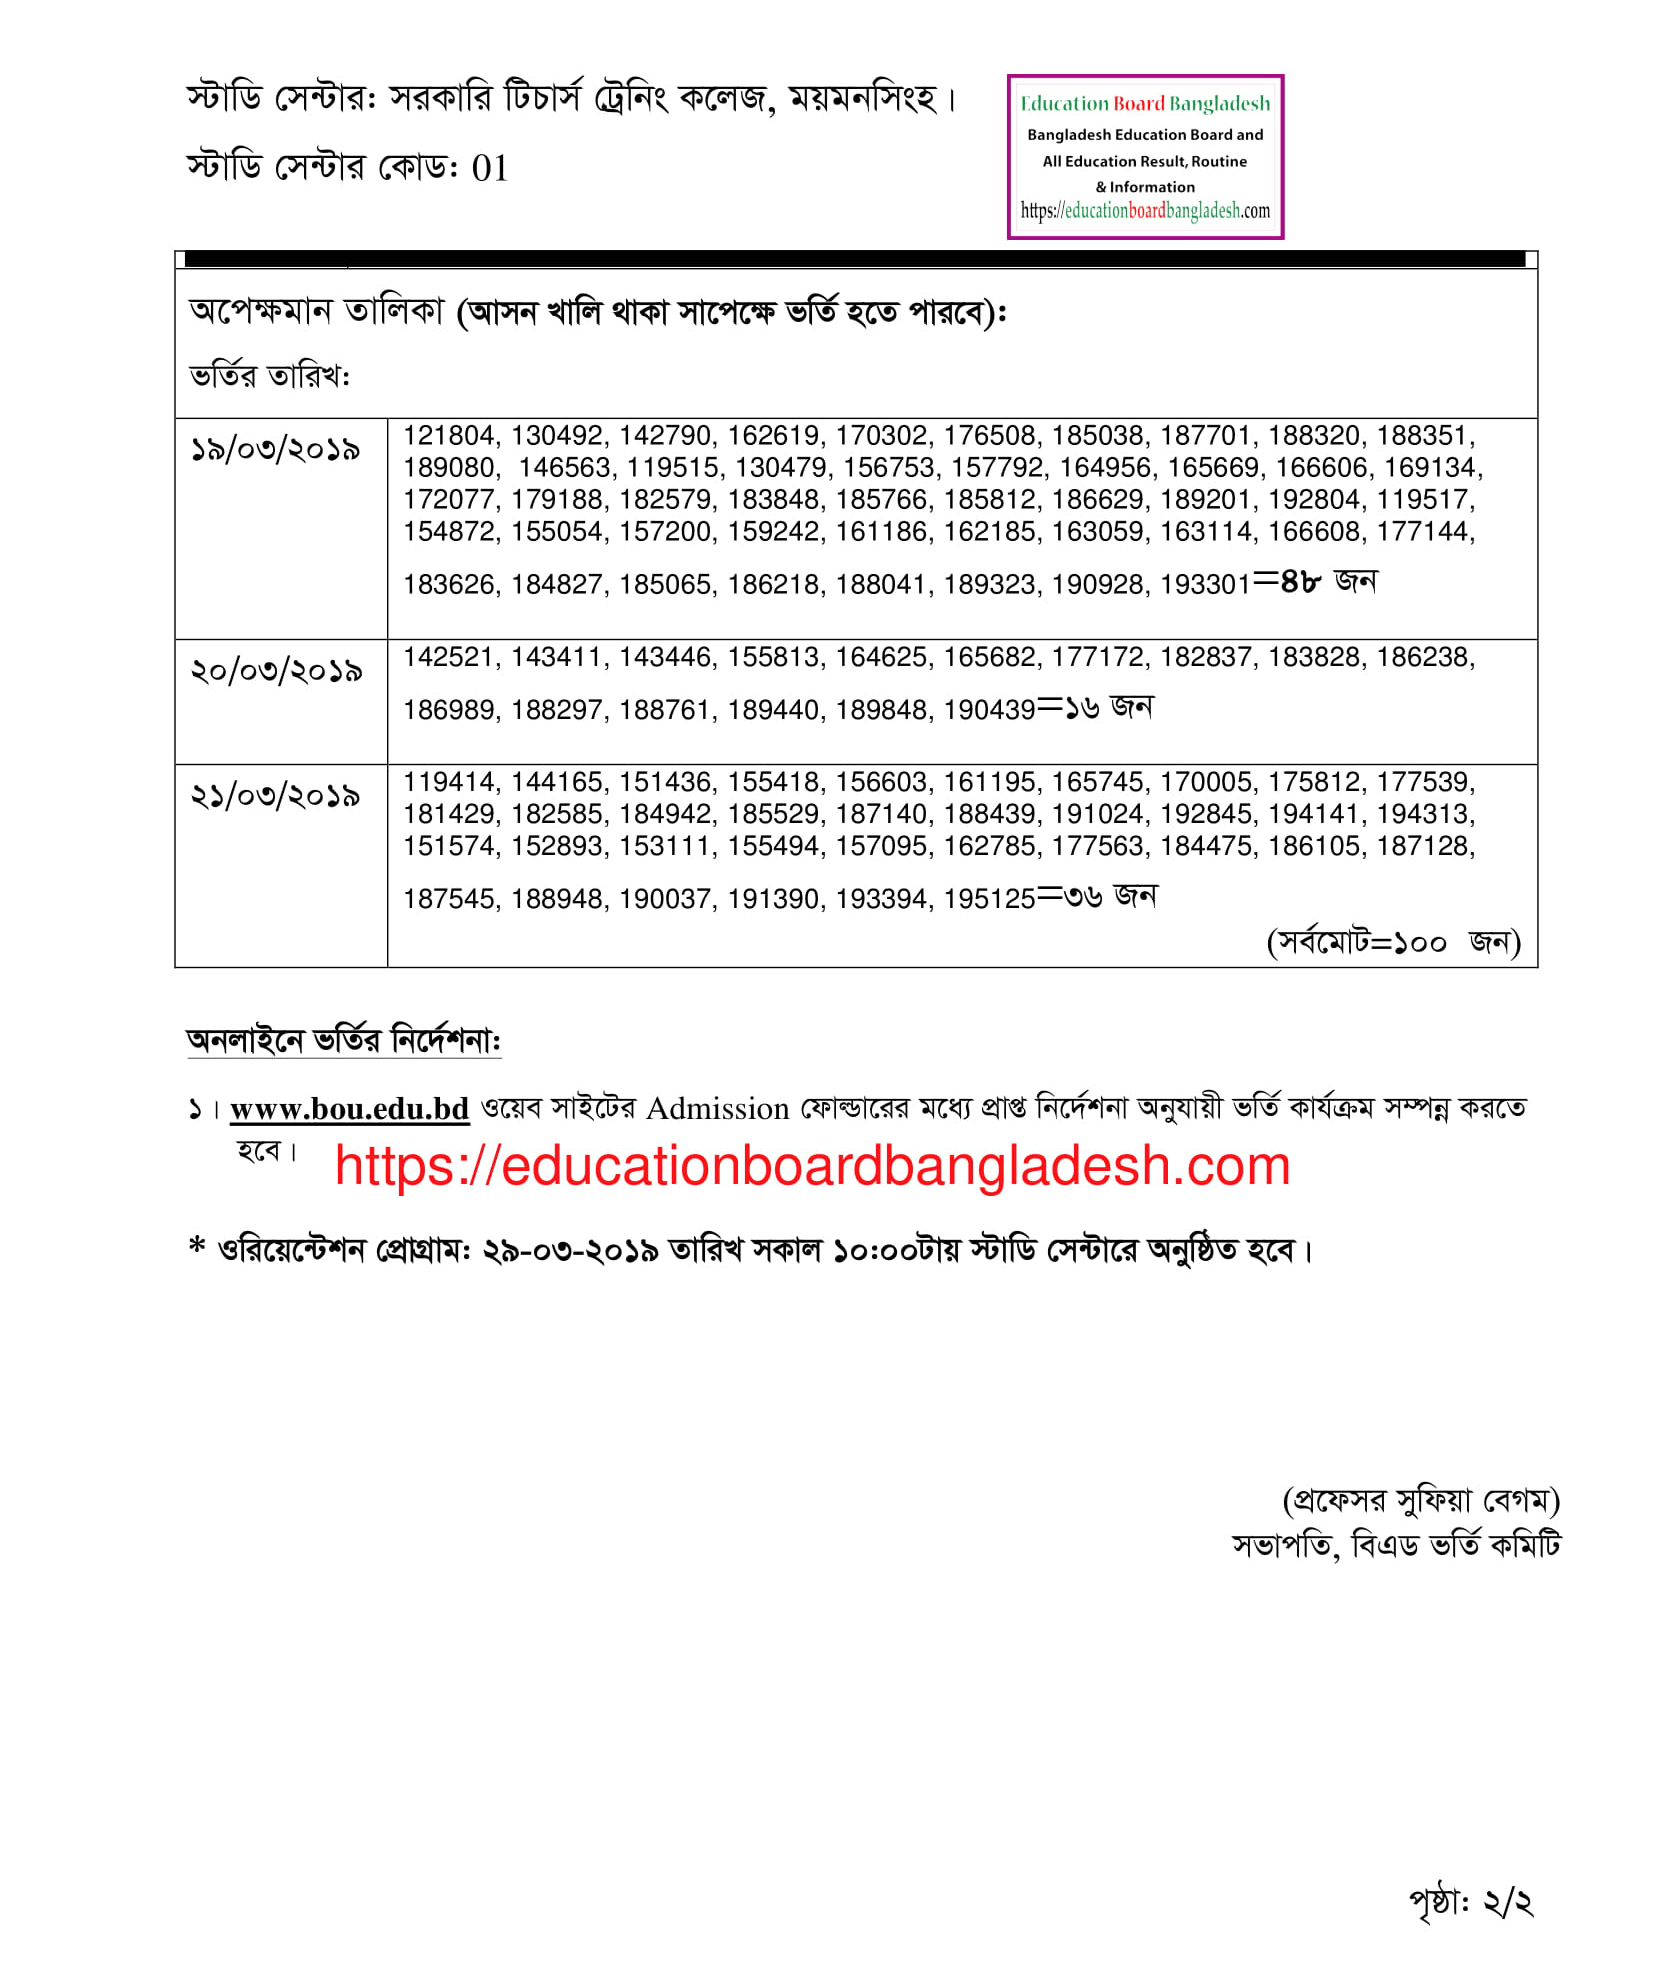 Govt teachers training college, Mymensingh (সরকারি টিচার্স ট্রেনিং কলেজ ময়মনসিংহ)